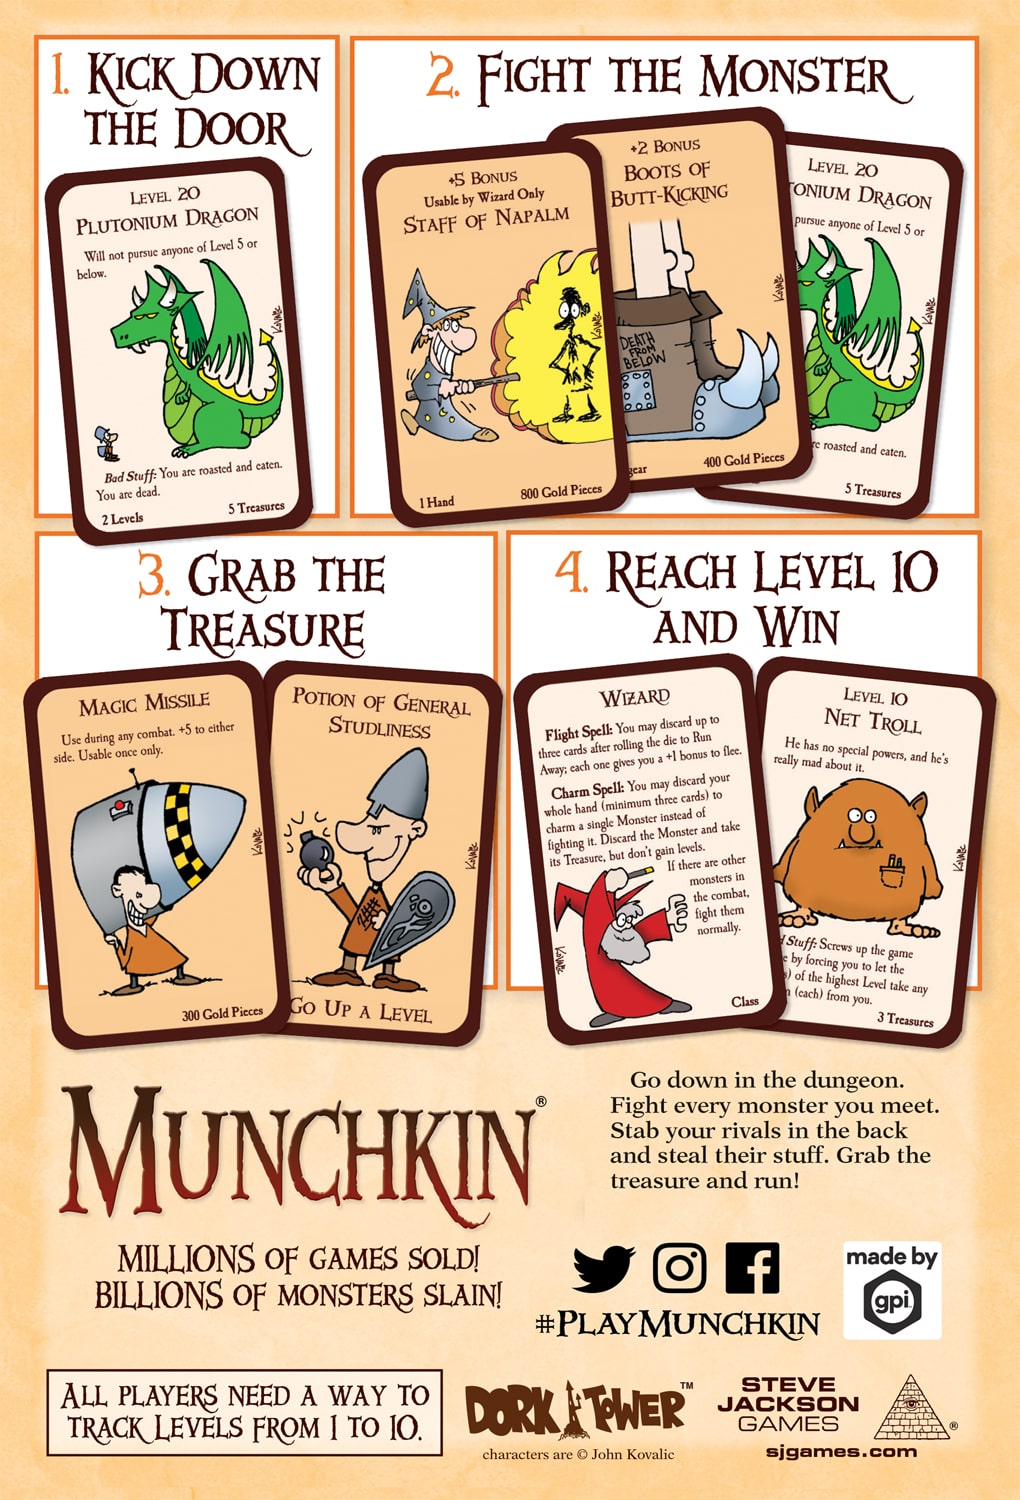 Munchkin Card Game Steve Jackson Games